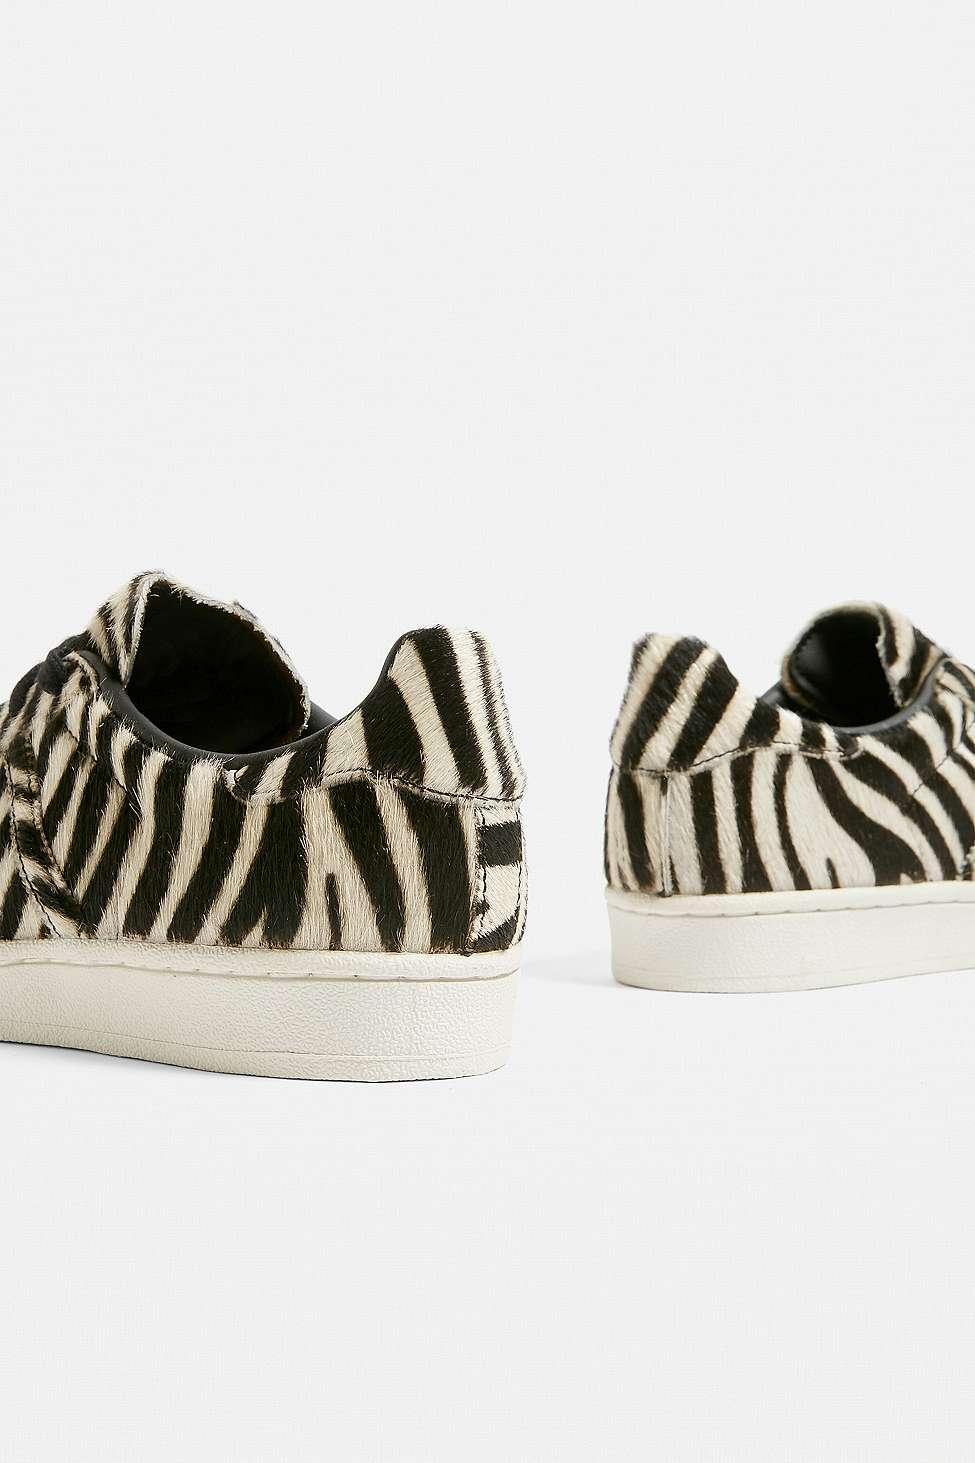 Afledning scarp Seks adidas Originals Rubber Superstar Zebra Print Trainers - Lyst